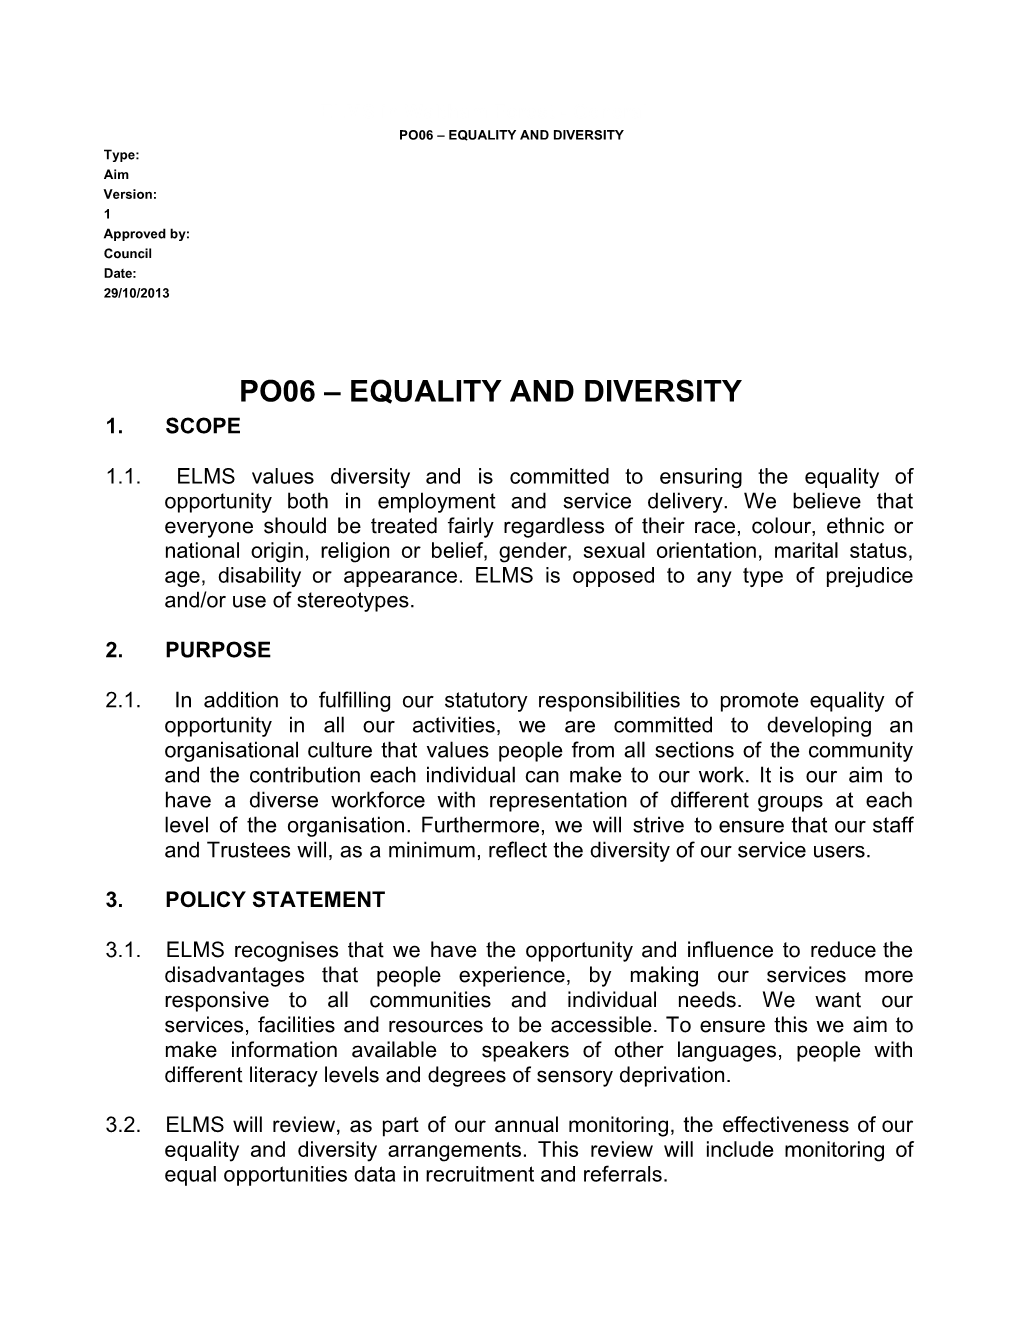 Po06 Equalityand Diversity